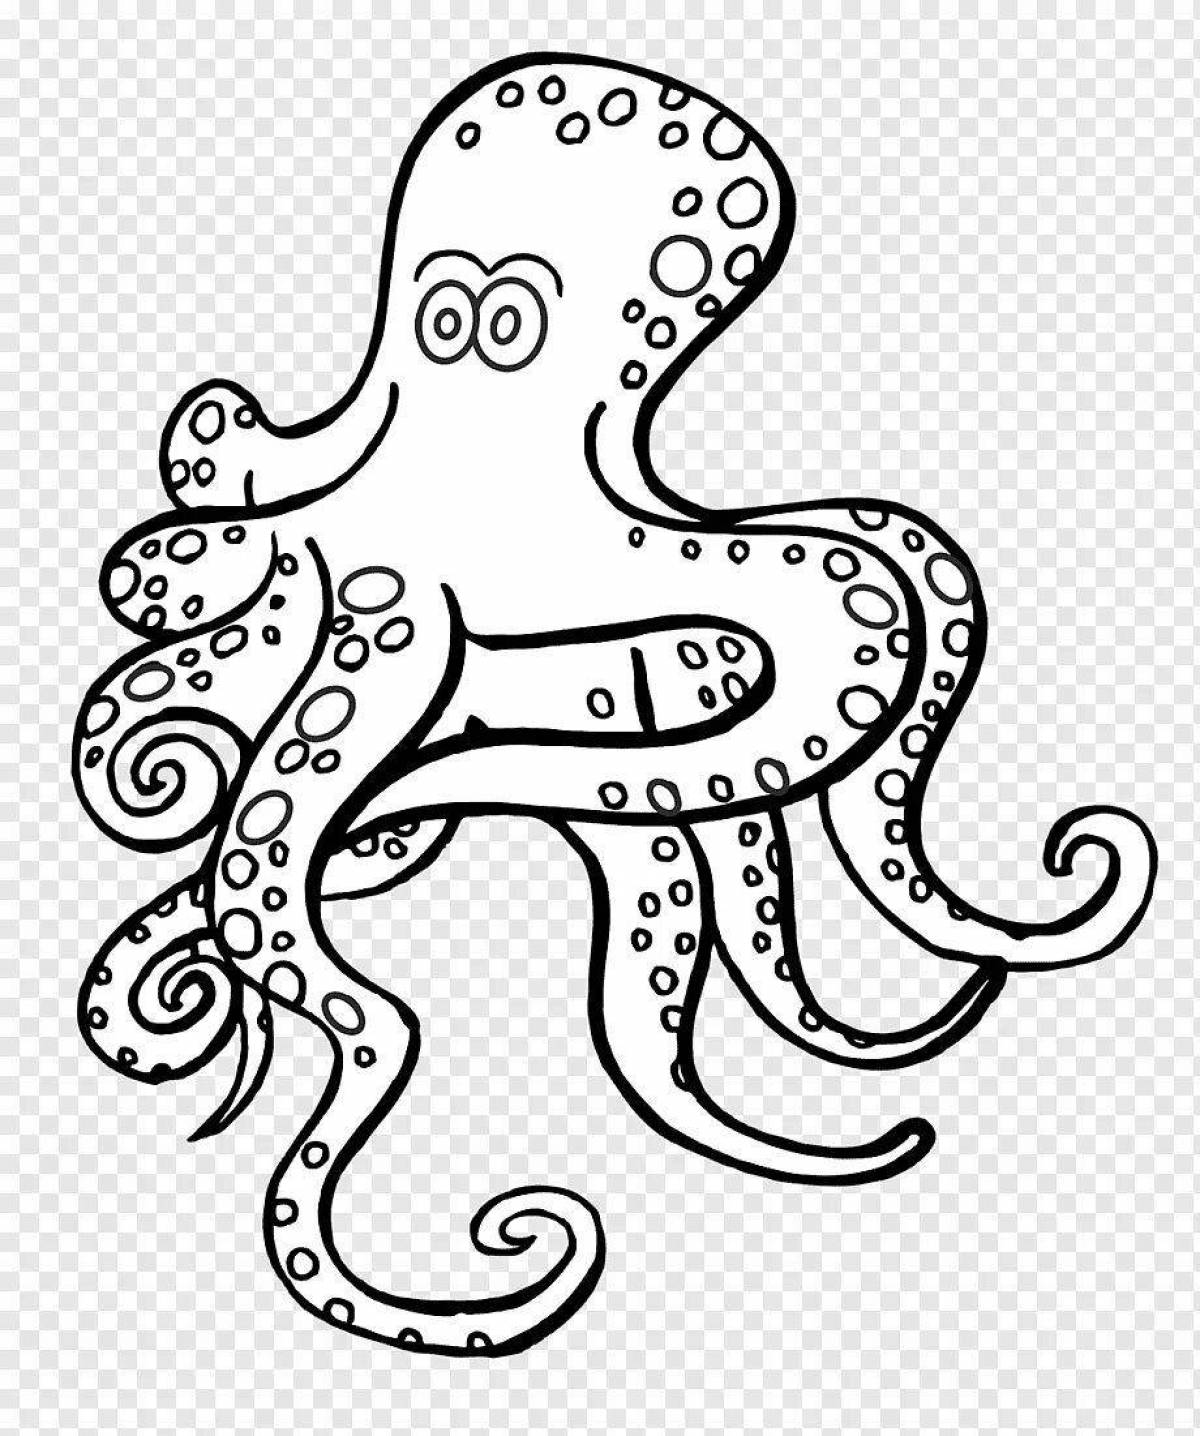 Exquisite changeling octopus coloring book